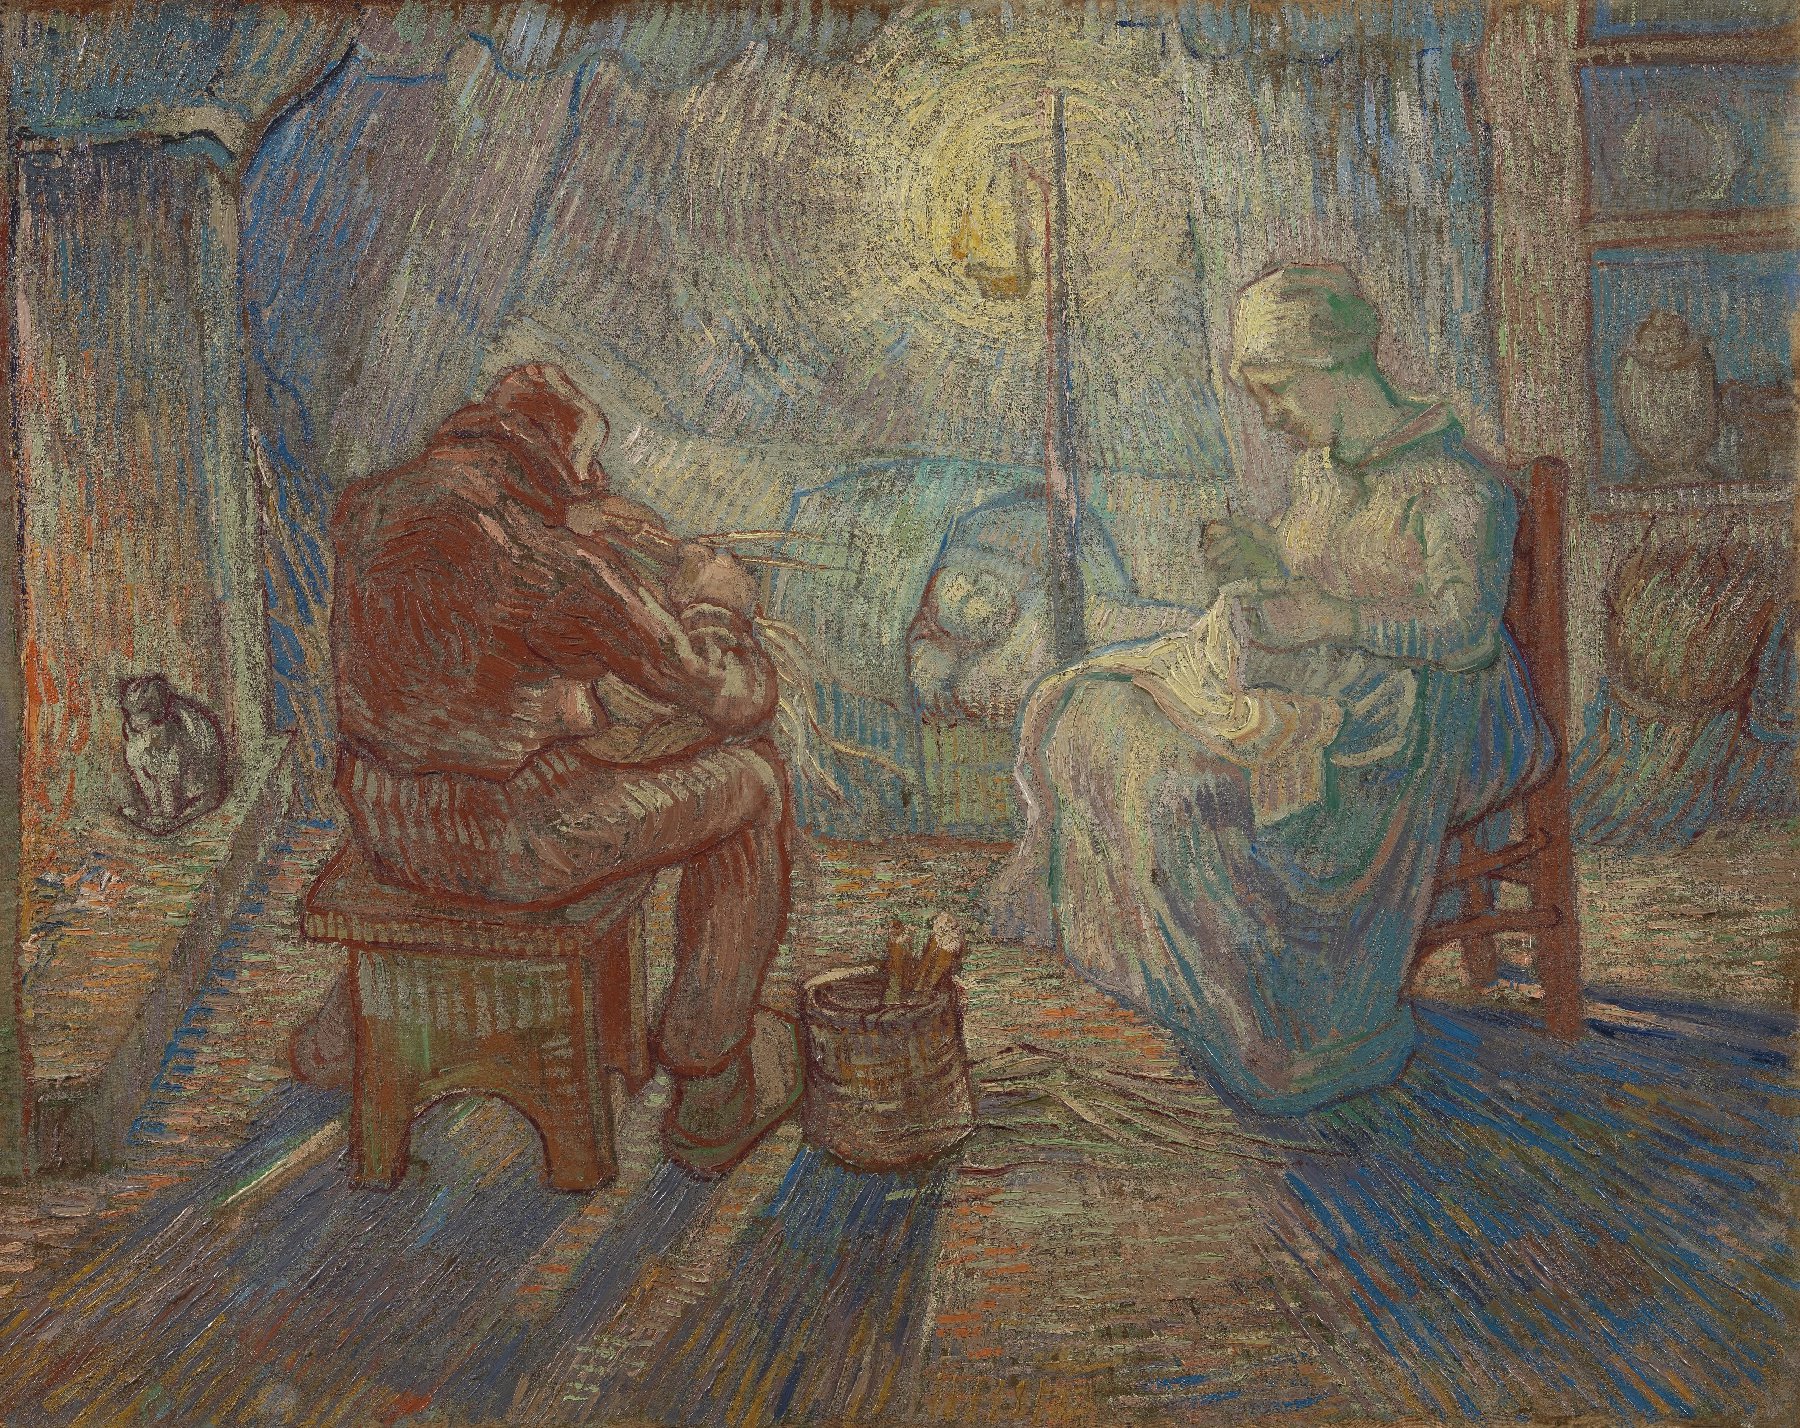 Avond (naar Millet) Vincent van Gogh (1853 - 1890), Saint-Rémy-de-Provence, oktober-november 1889